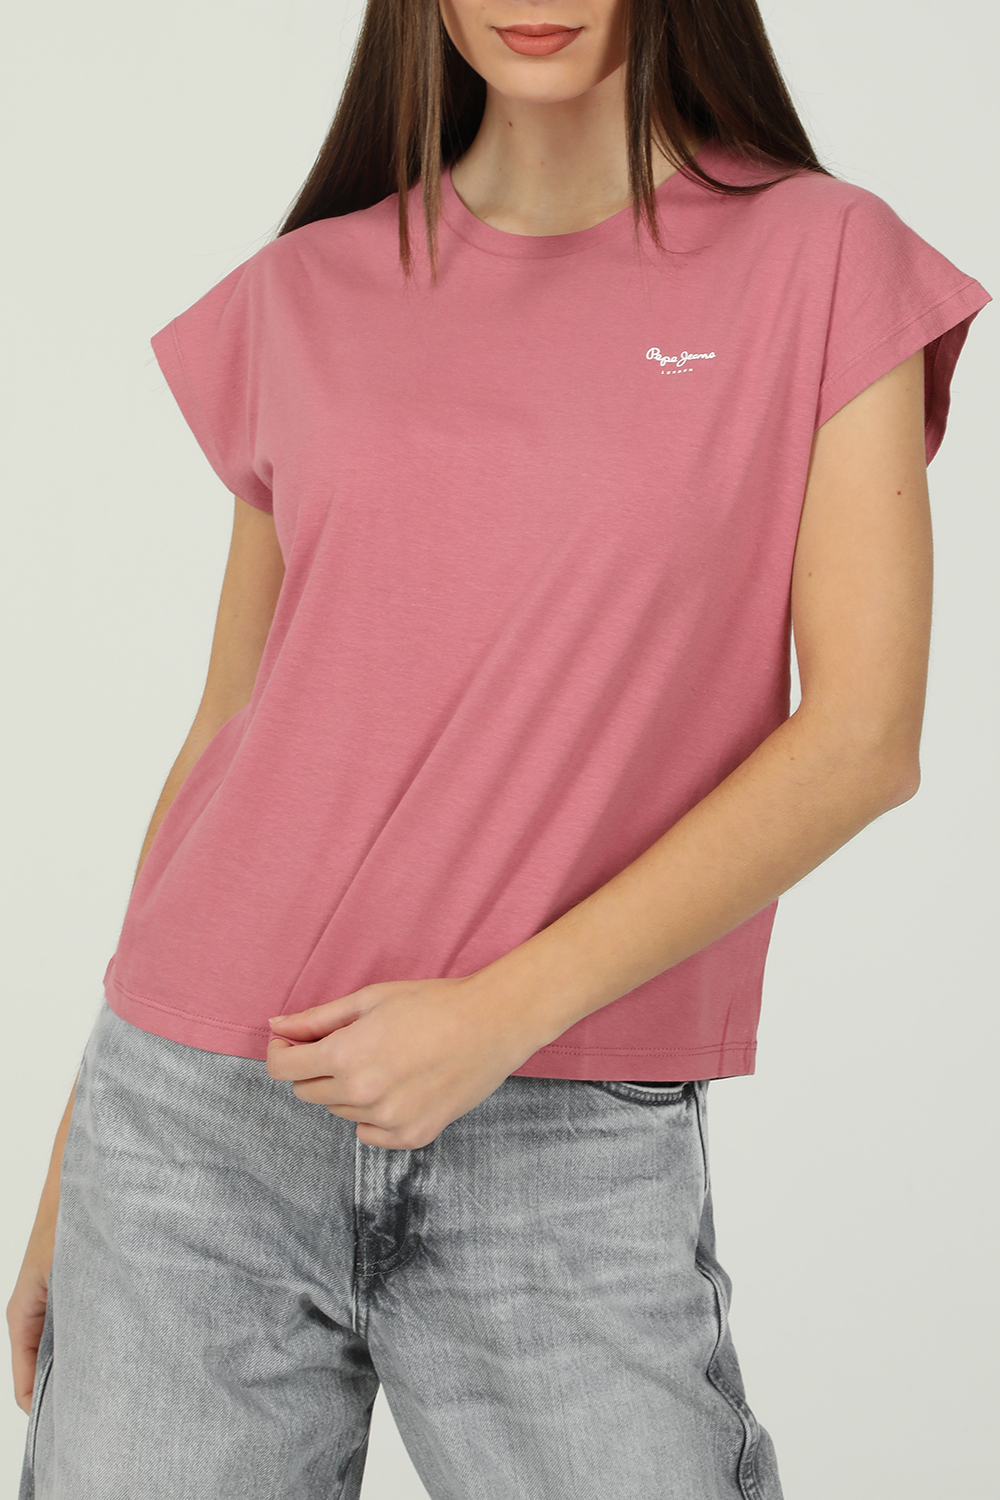 PEPE JEANS – Γυναικεία κοντομάνικη μπλούζα PEPE JEANS BLOOM ροζ 1822900.0-004H